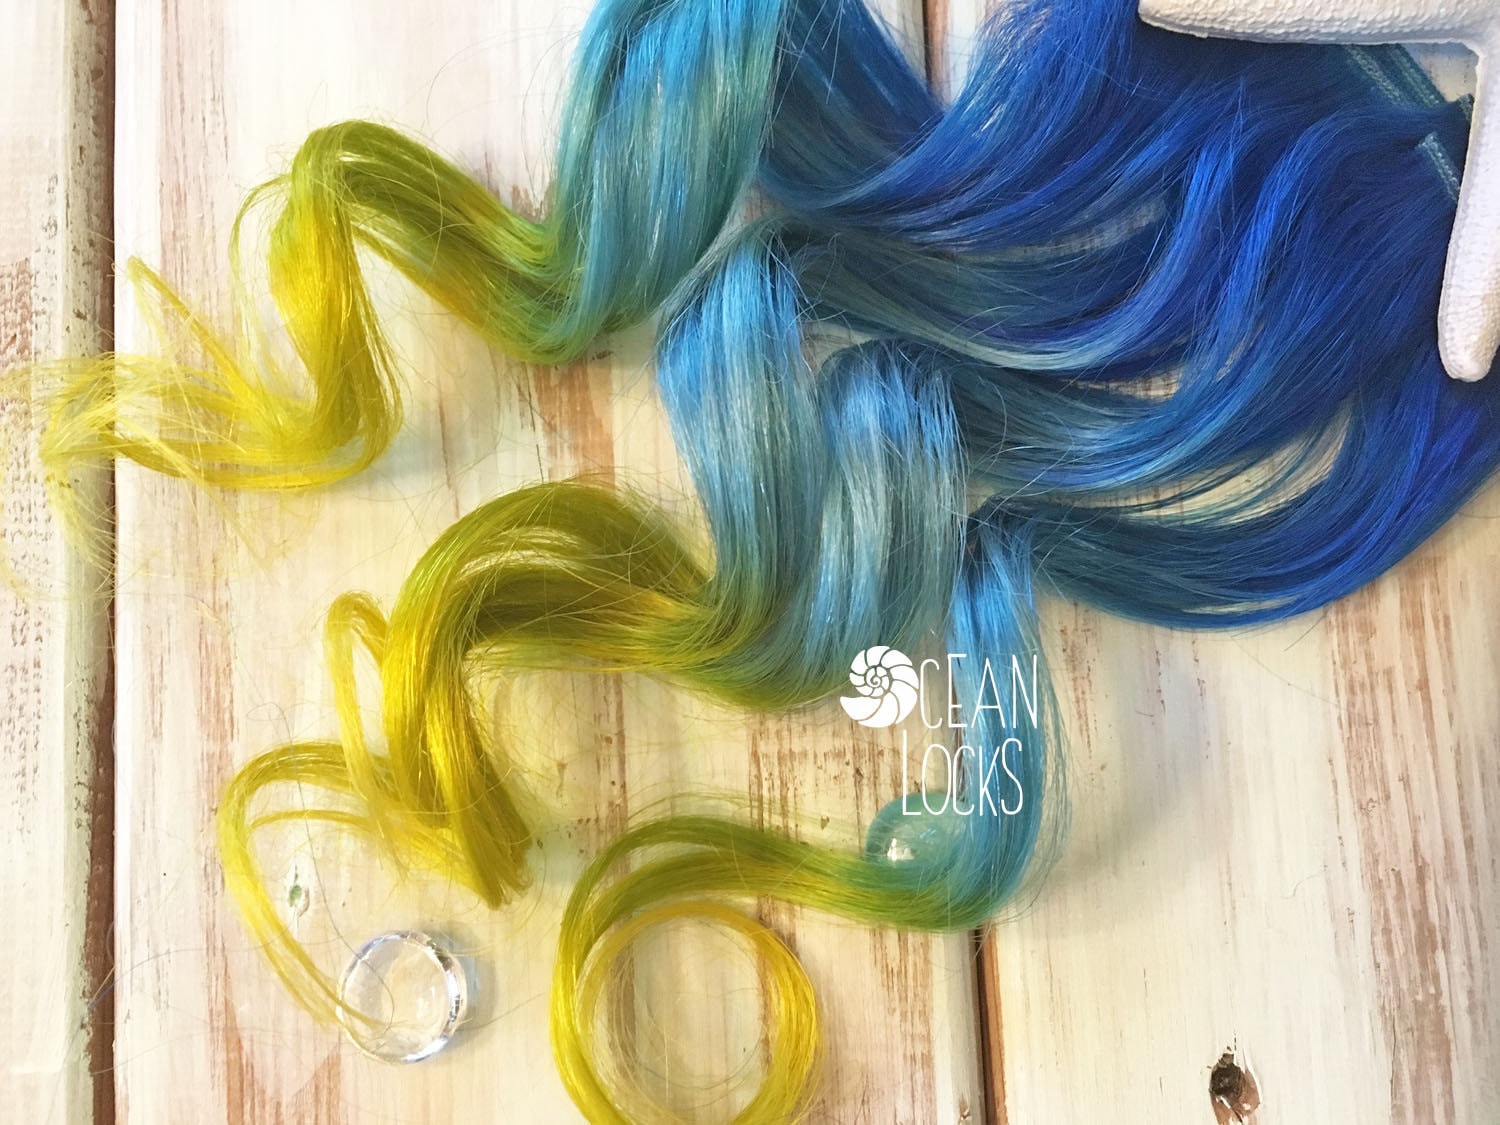 Turquoise Aqua Blue Hair Extensions: Etsy.com - wide 6